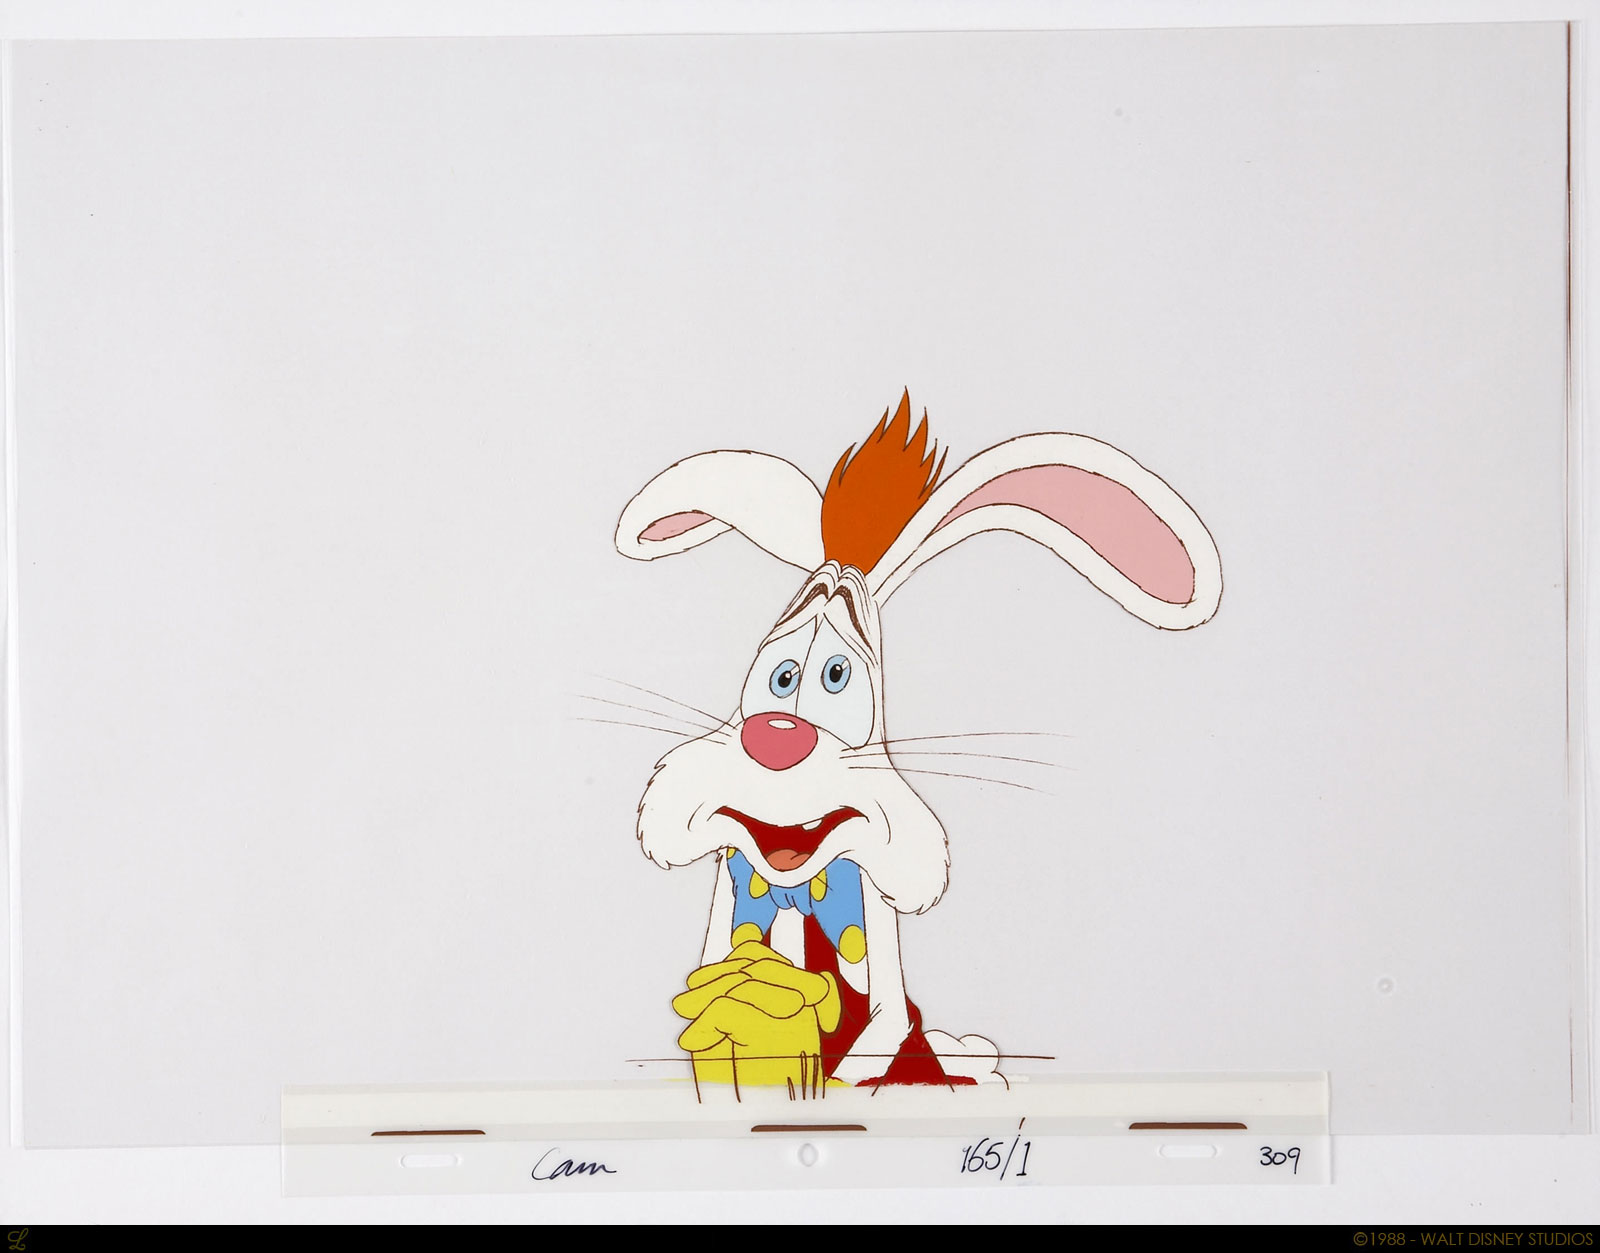 Living Lines Library Who Framed Roger Rabbit 1988 Production Cels